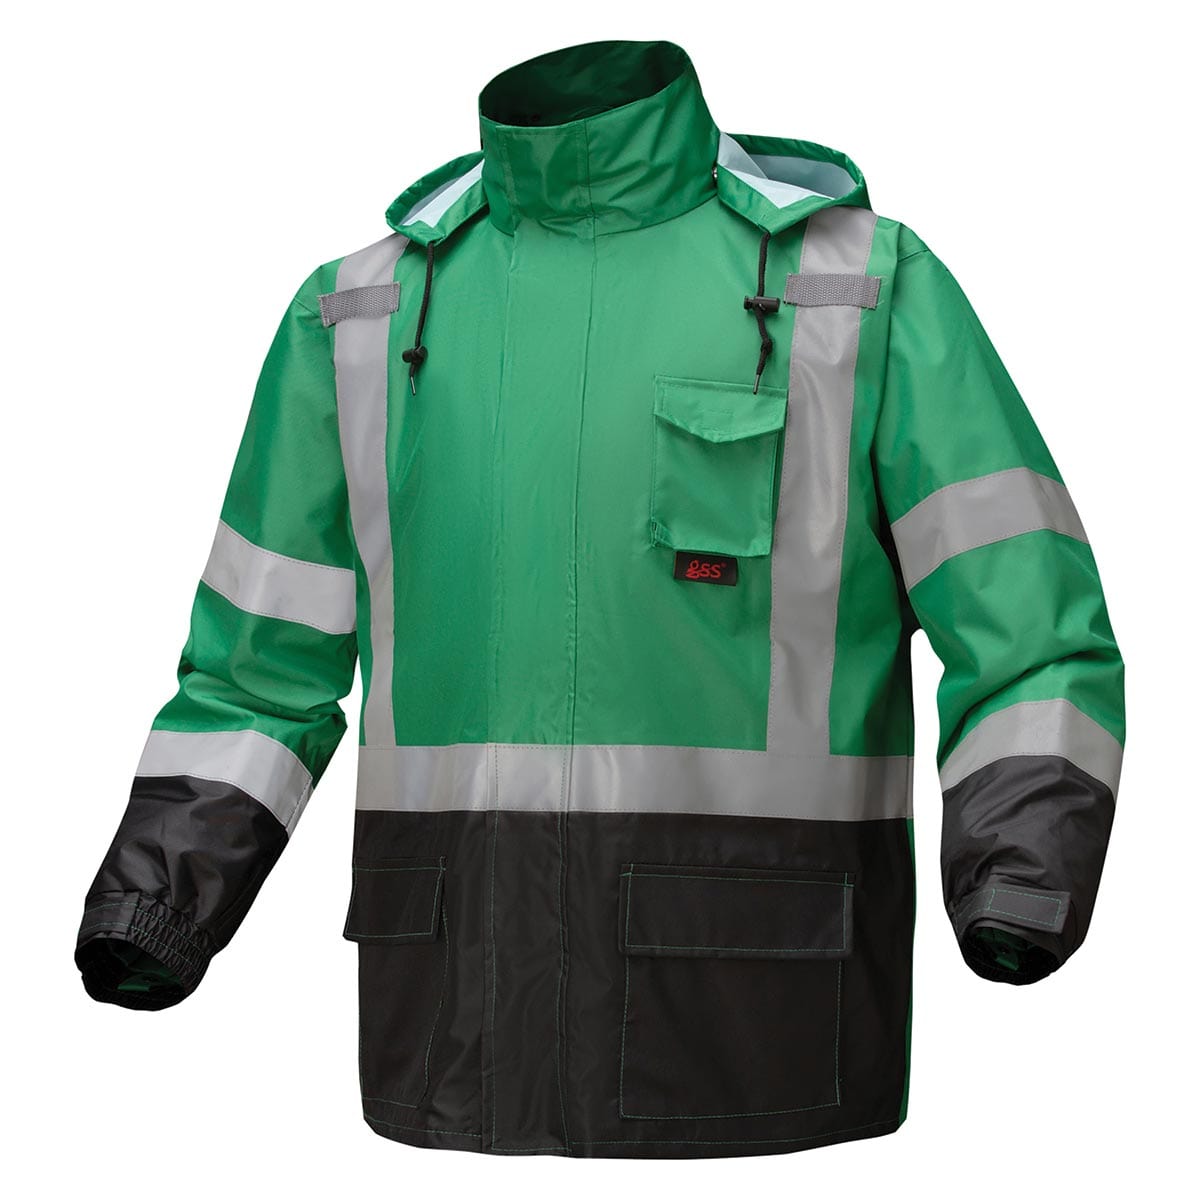 GSS Safety Enhanced Visibility Premium Hooded Rain Coat w/Black Bottom